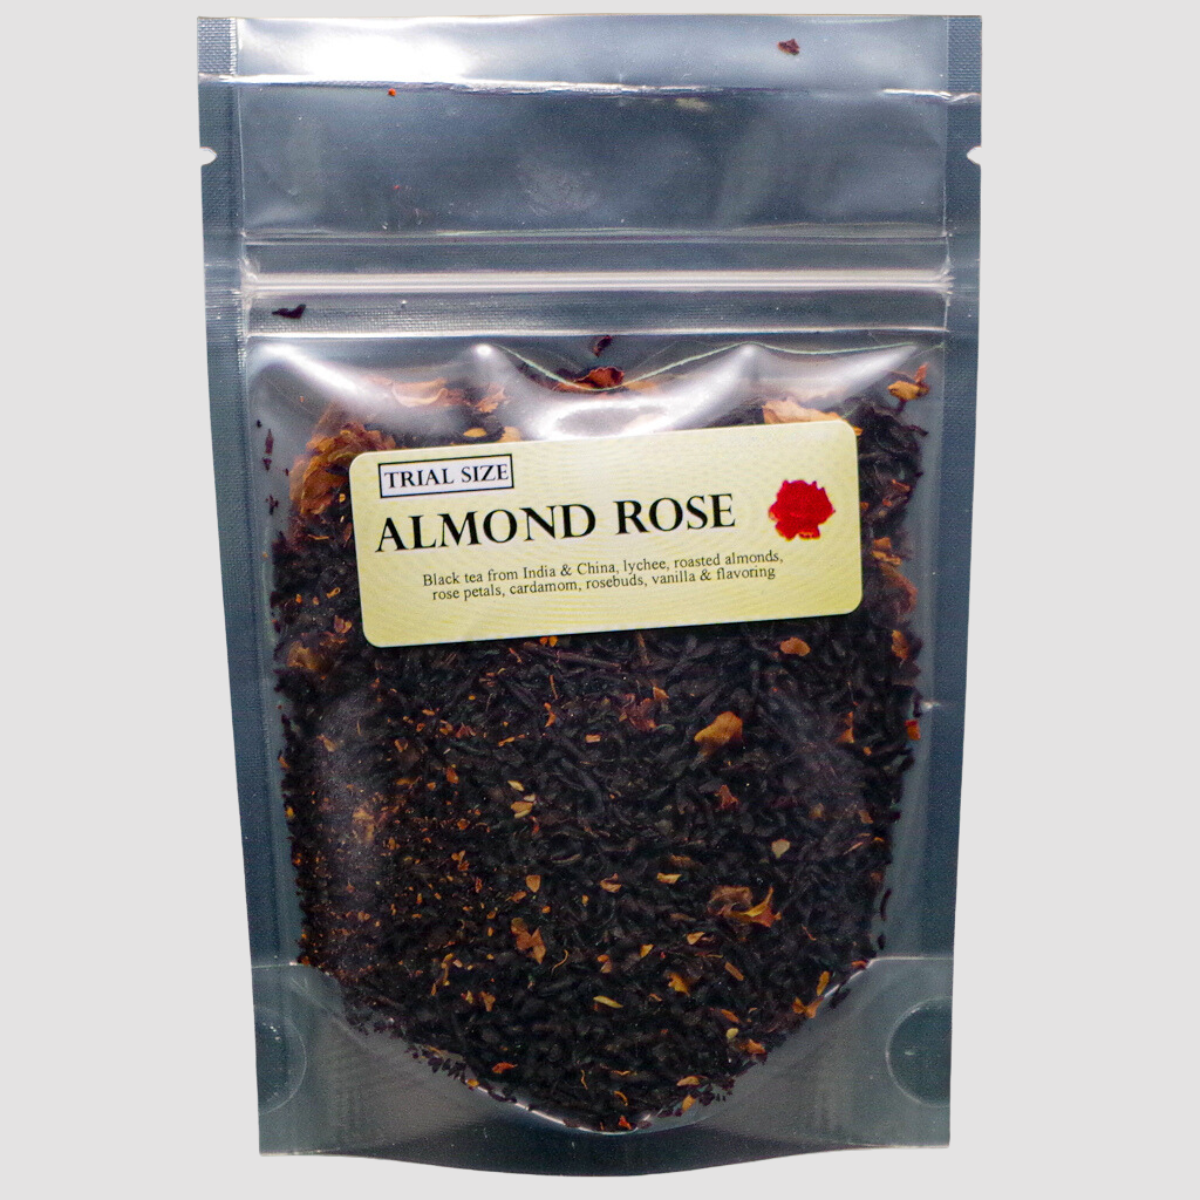 Almond Rose  •   Specialty Loose Leaf Tea